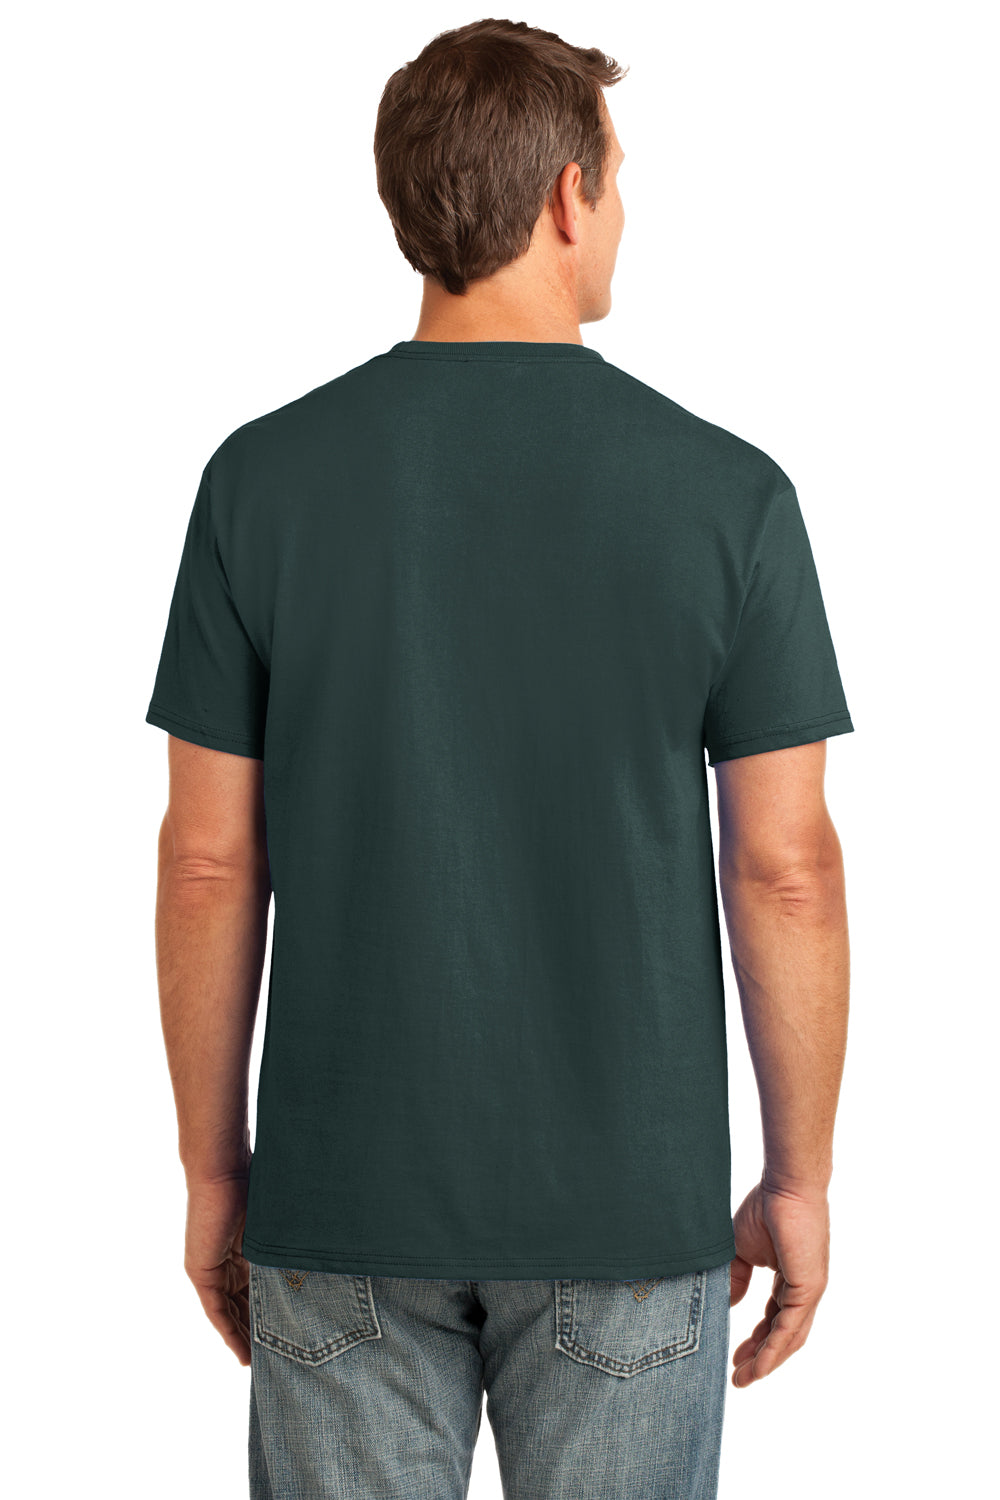 Port & Company PC54P Mens Core Short Sleeve Crewneck T-Shirt w/ Pocket Dark Green Back